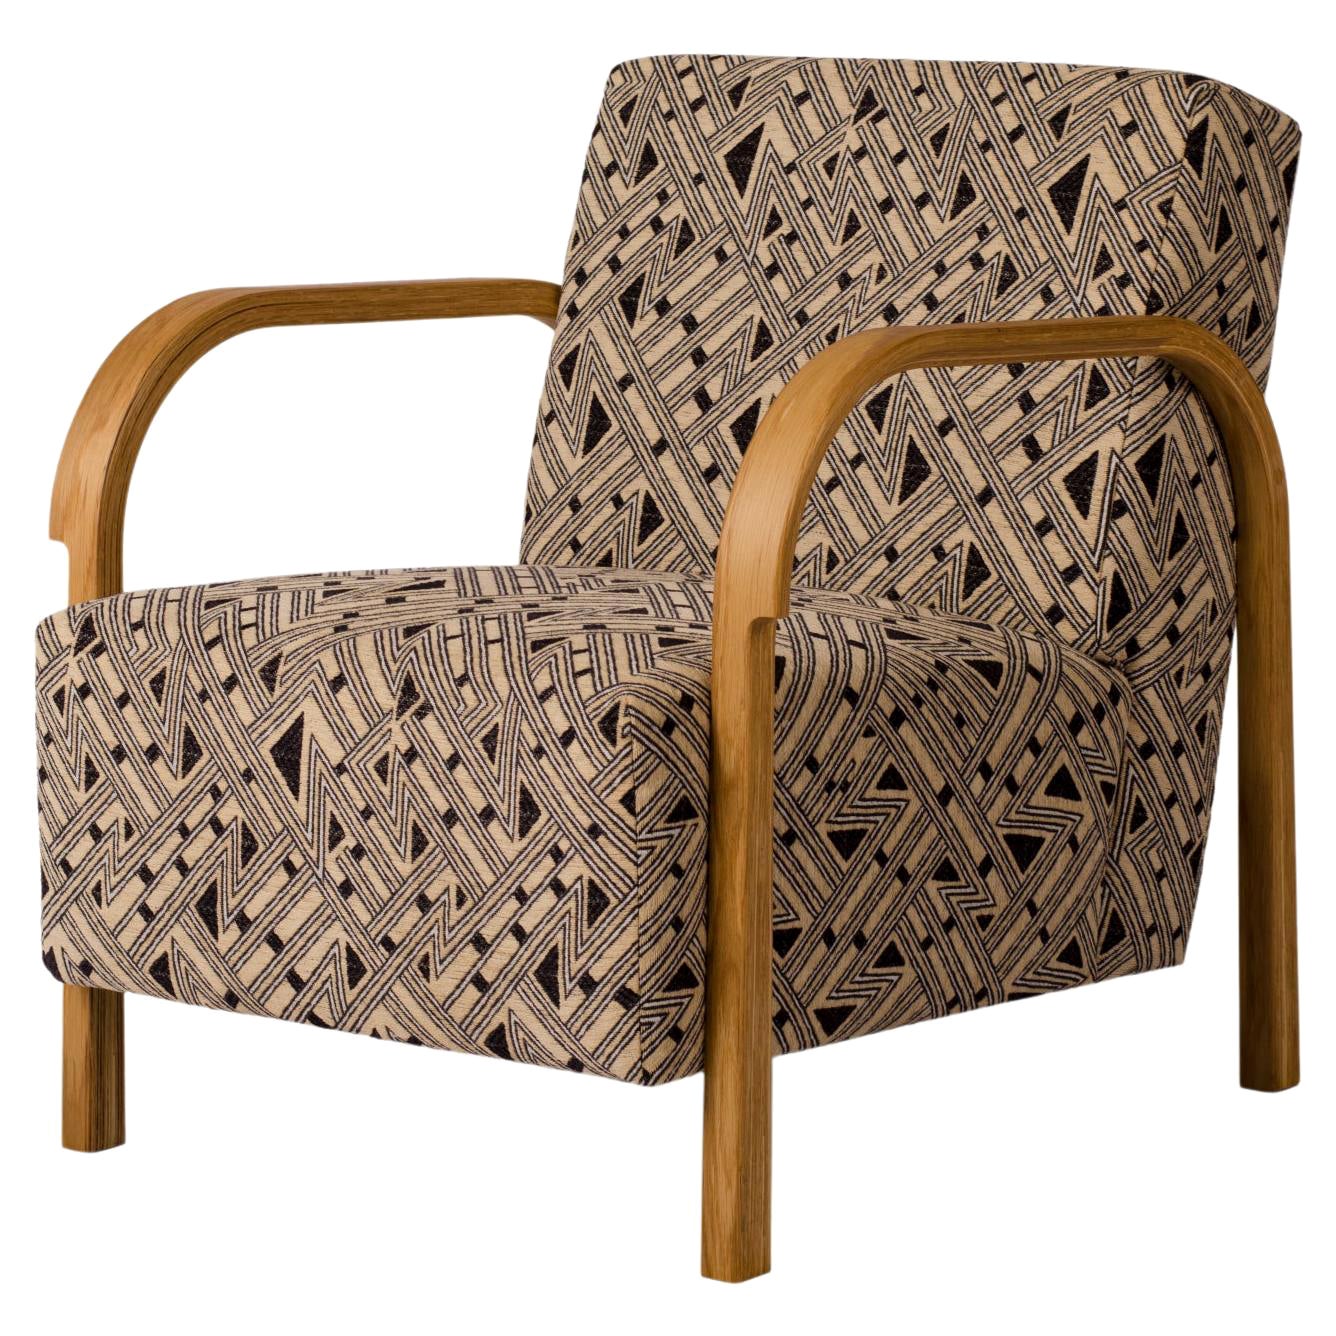 JENNIFER SHORTO / Kongaline & Seafoam ARCH Lounge Chairs by Mazo Design For Sale